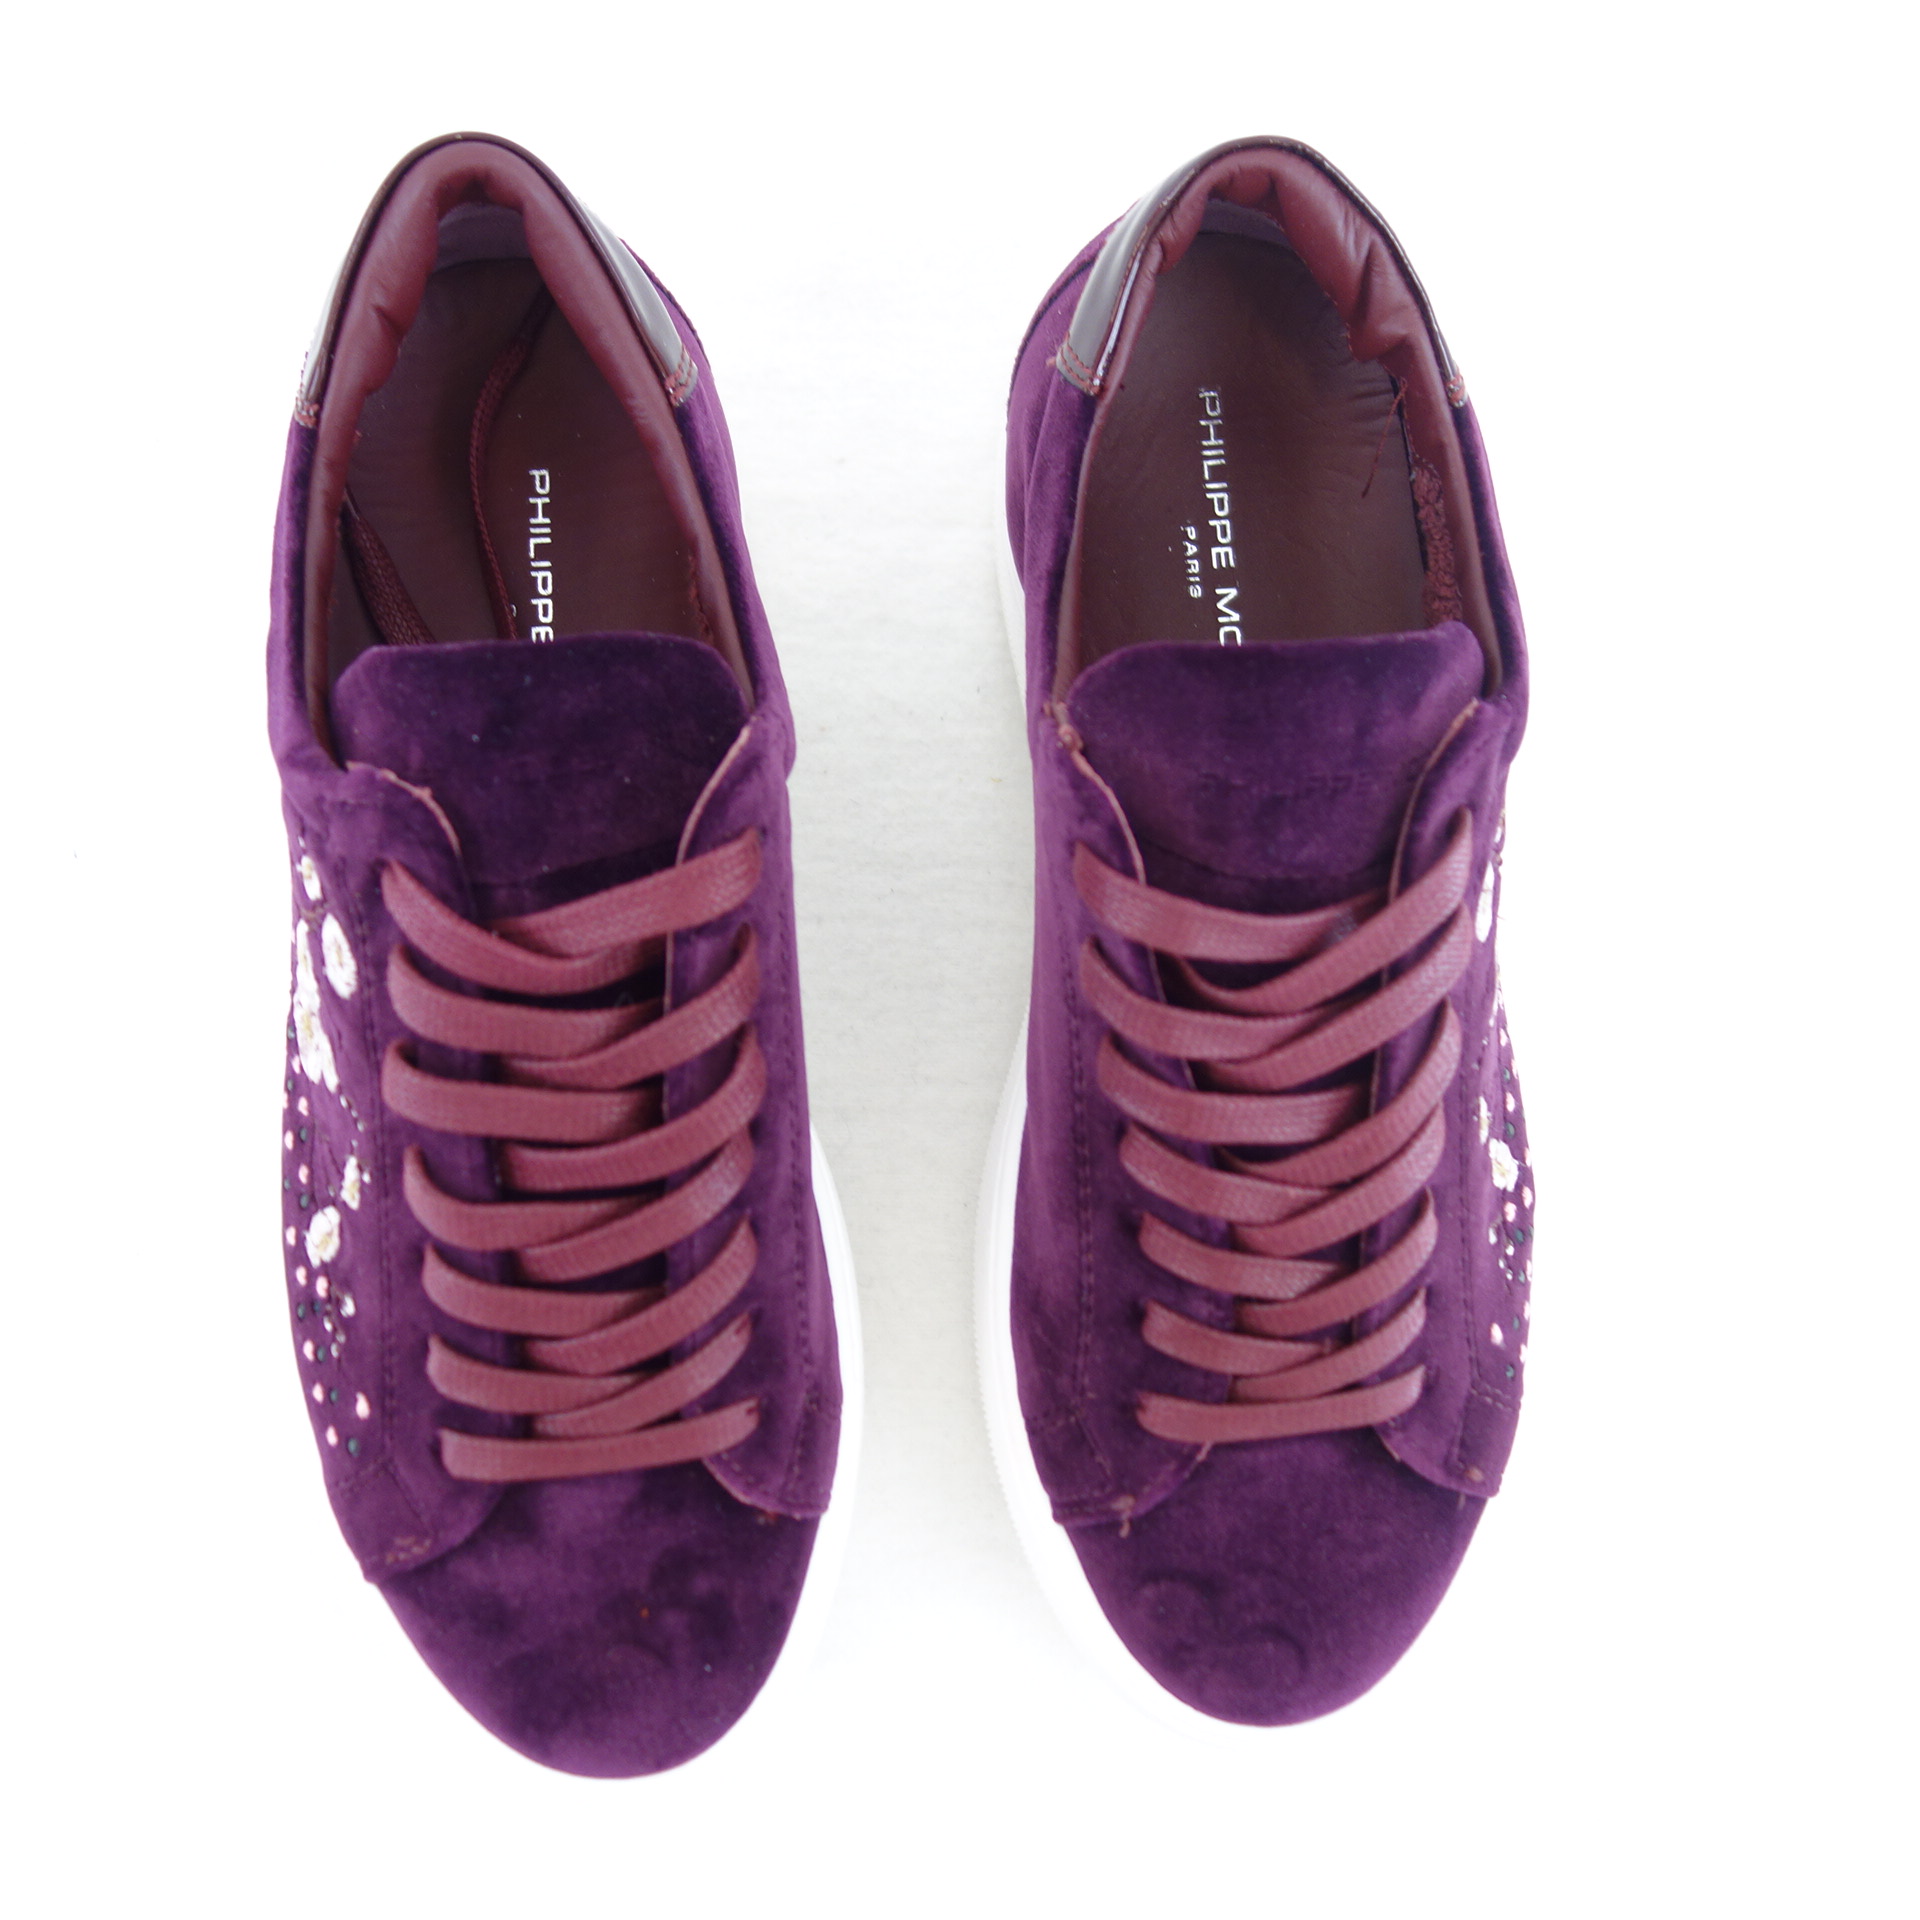 PHILIPPE MODEL Damen Schuhe Sportschuhe Low Top Sneaker Bordeaux Samt Leder  38 MADELEINE